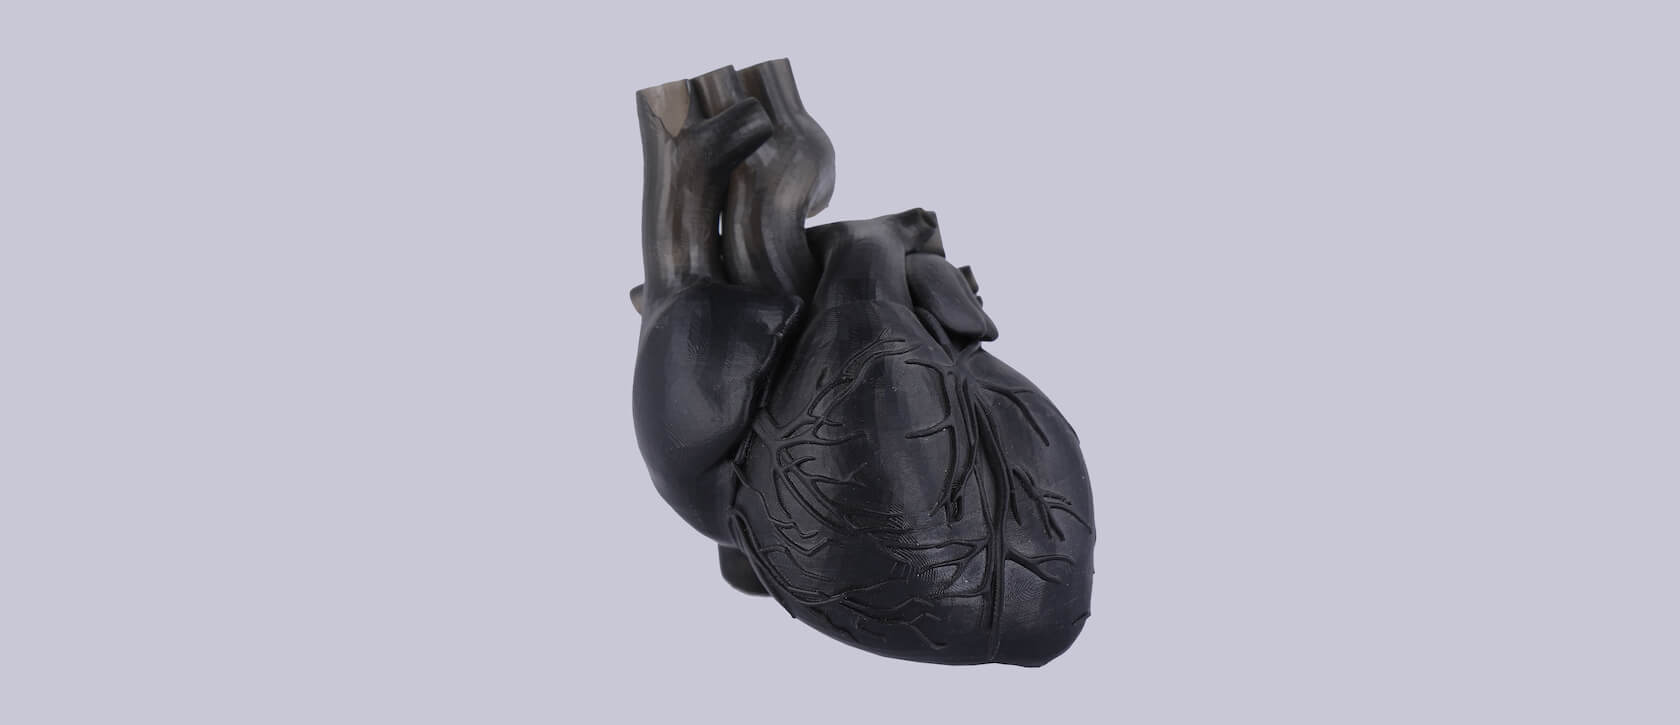 3D Printer for Human Organs